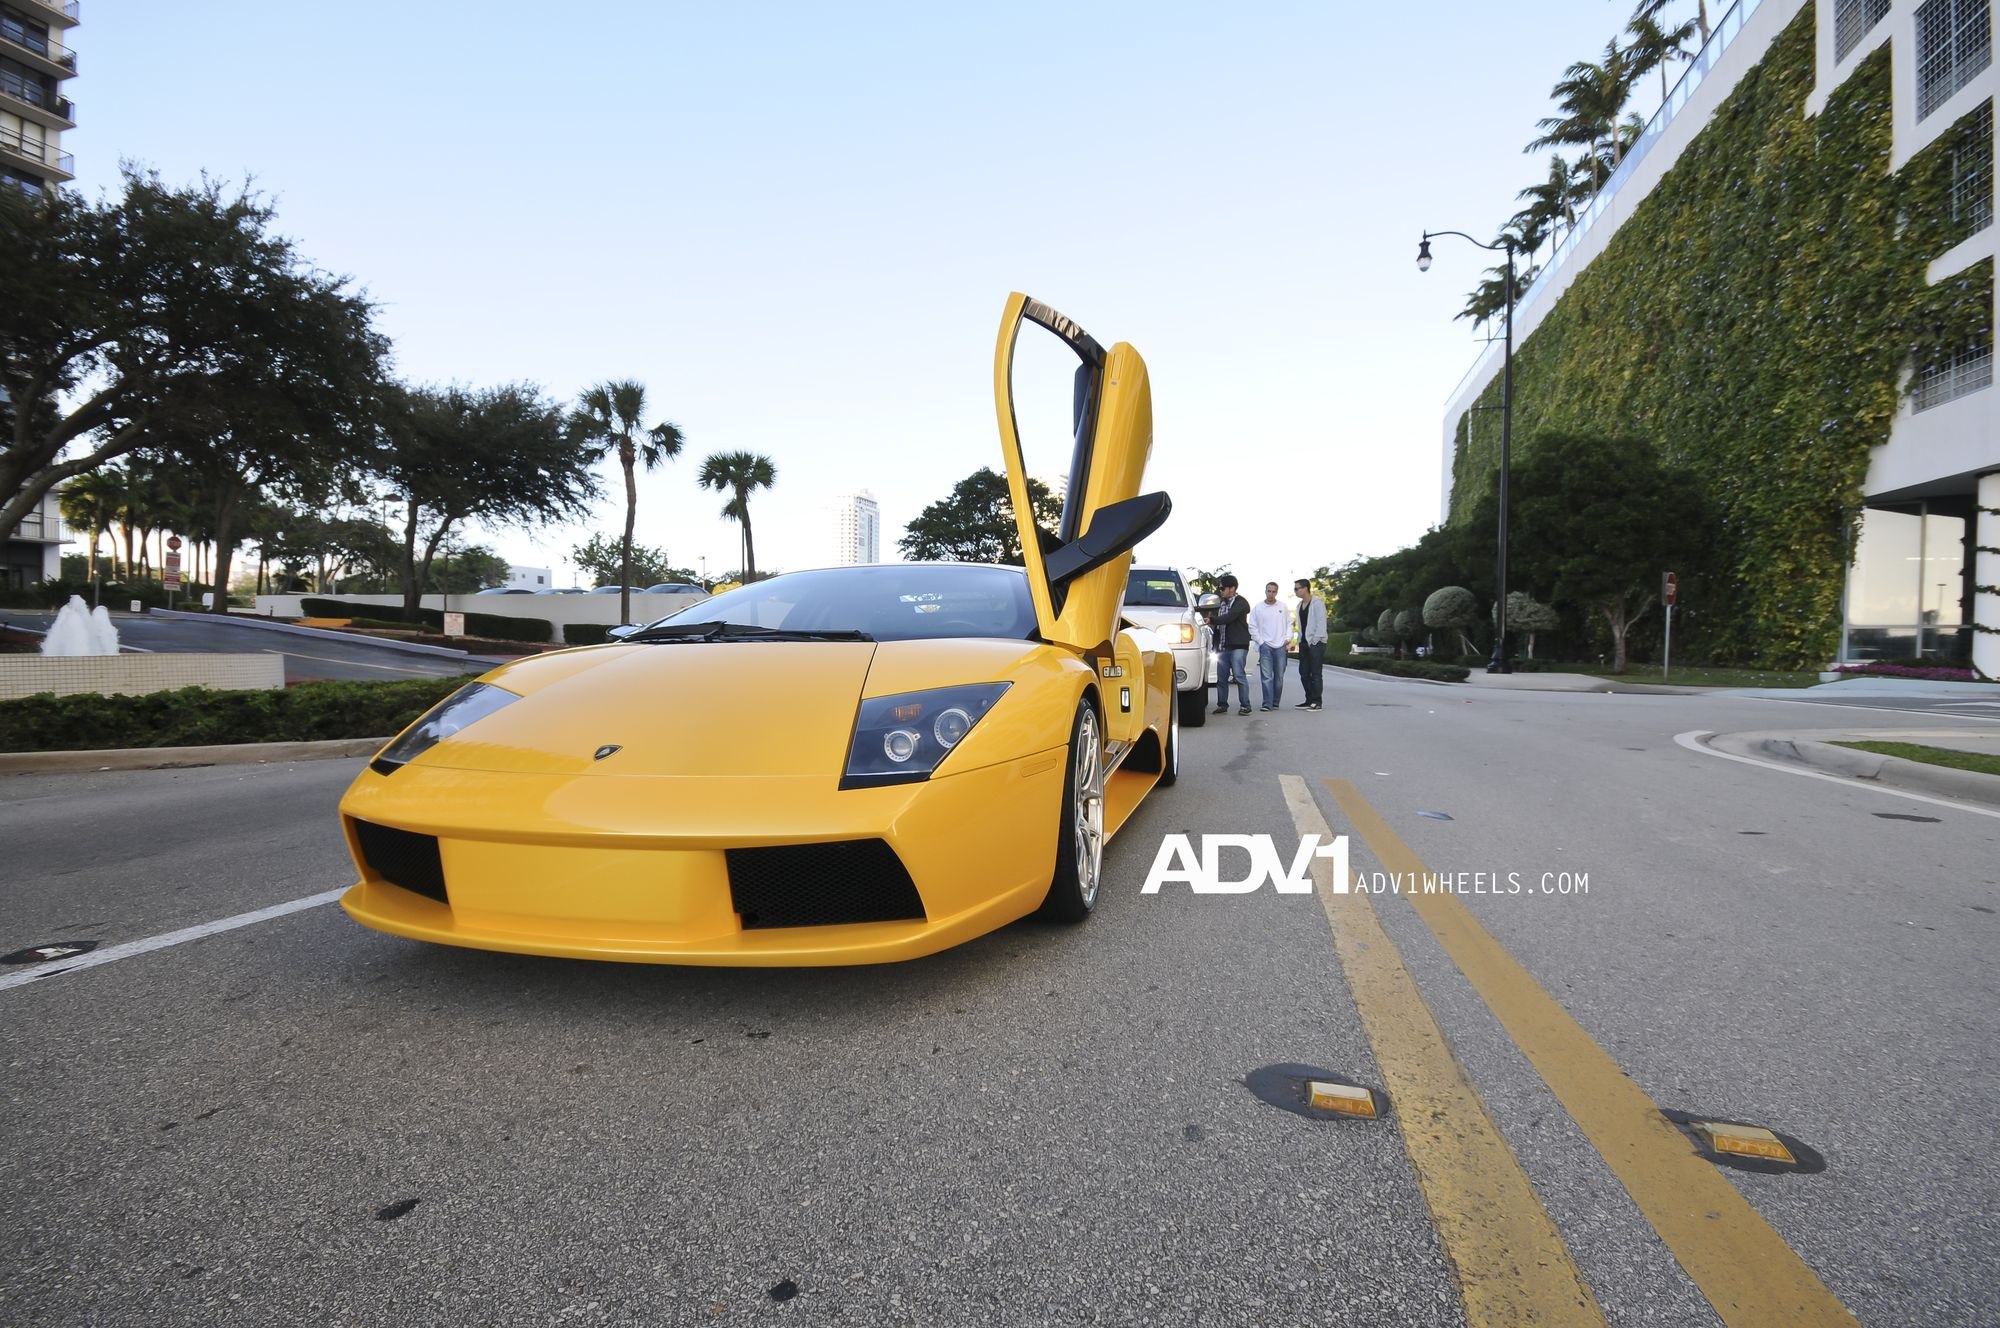 Aftermarket Vertical Doors on Yellow Lamborghini Murcielago - Photo by ADV.1